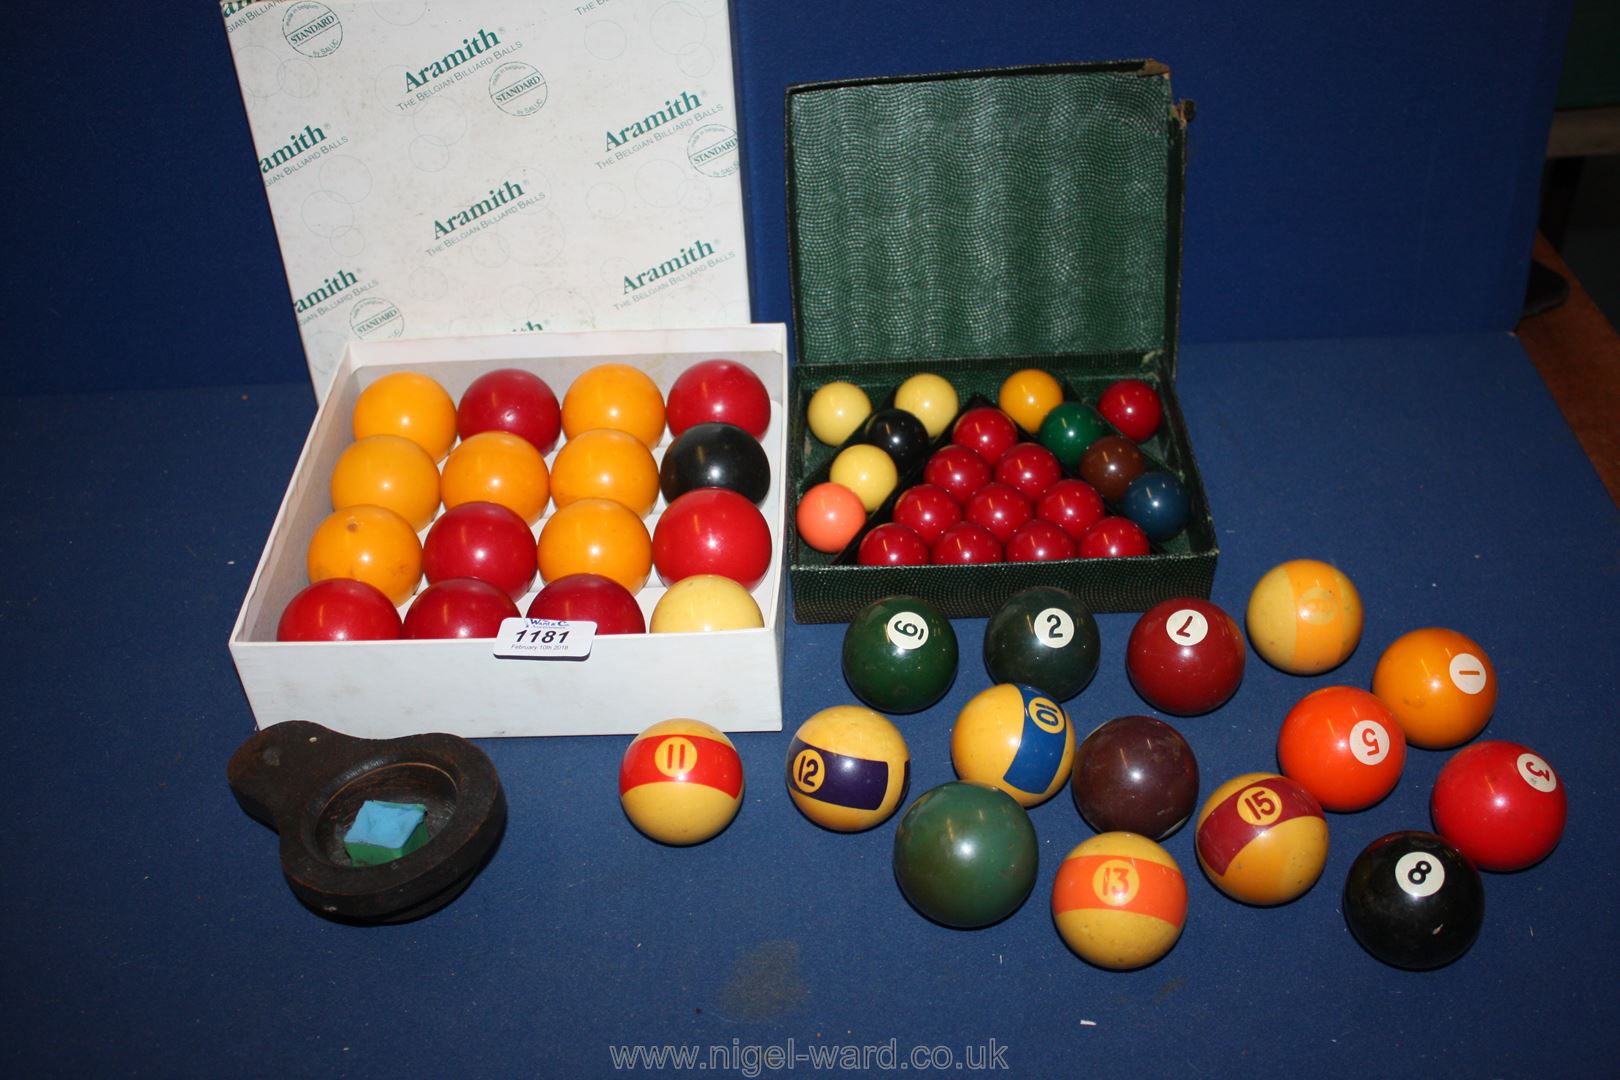 A quantity of Billiard Balls and a boxed set of small snooker balls